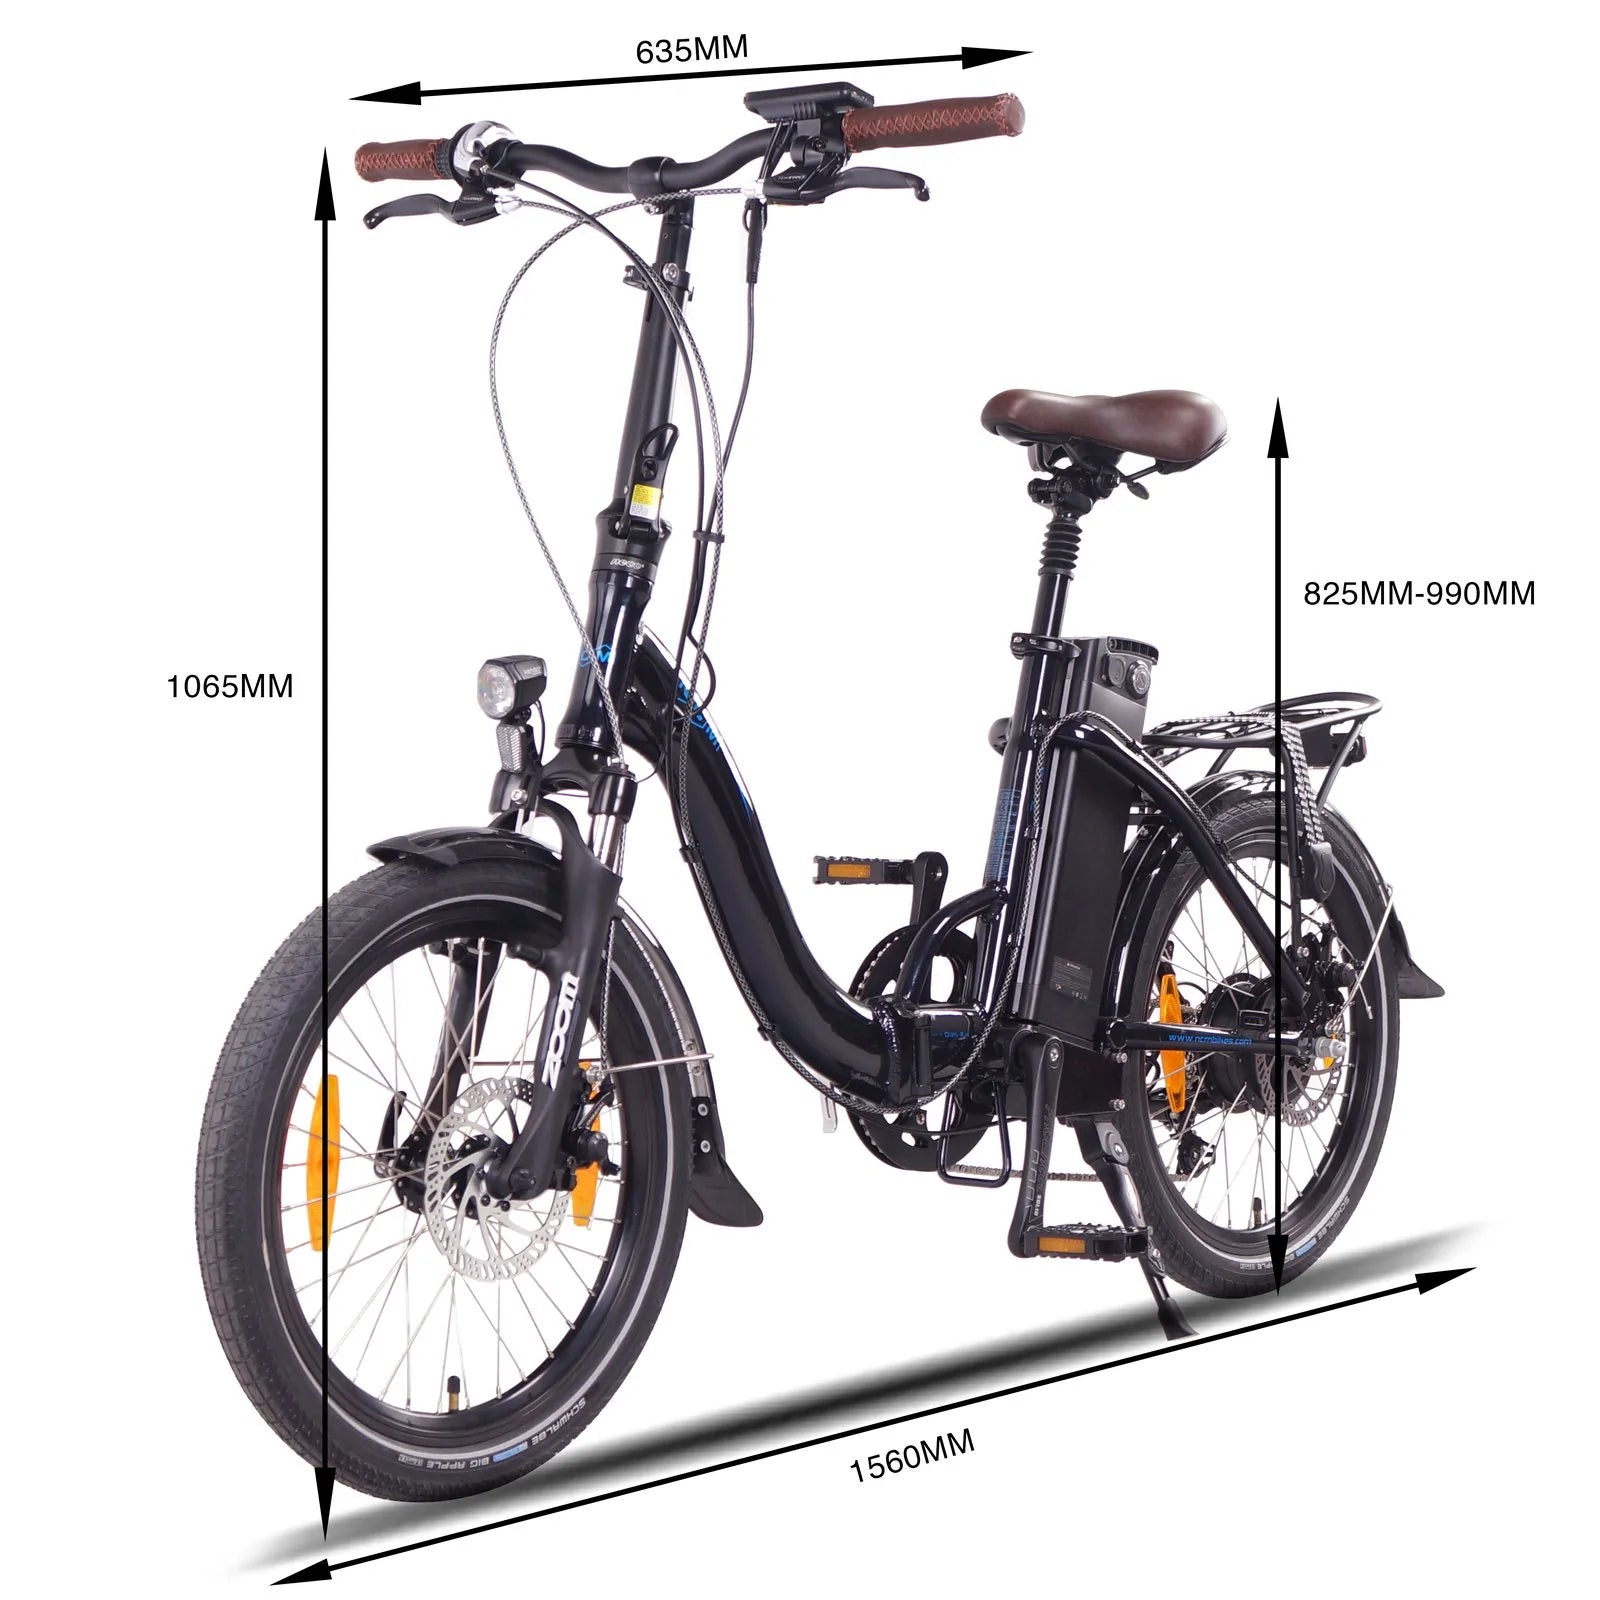 NCM Paris+ Folding E-Bike, 250W, 36V 19Ah 684Wh Battery, Size 20 | Leon Cycle Ebikes